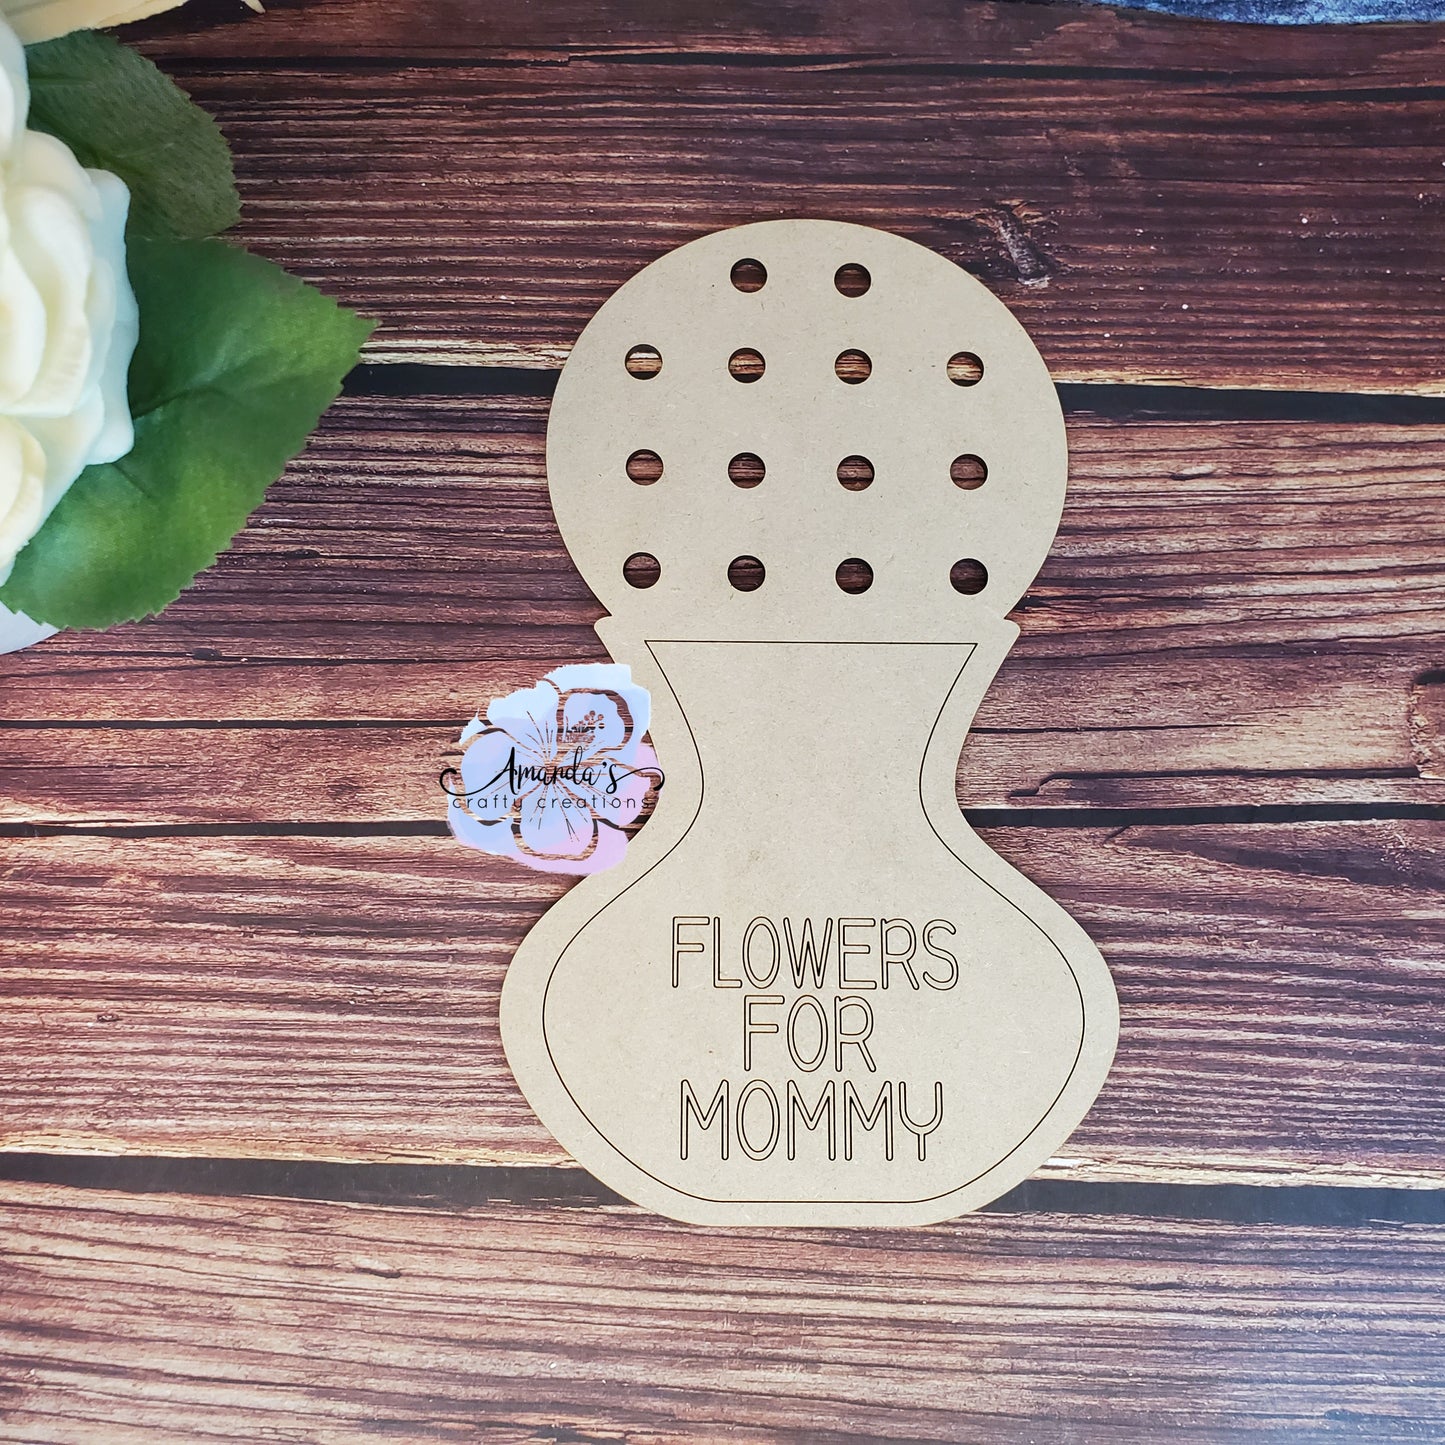 "Flower collector", flower display, dandelion display, mom's flowers, flowers for mom